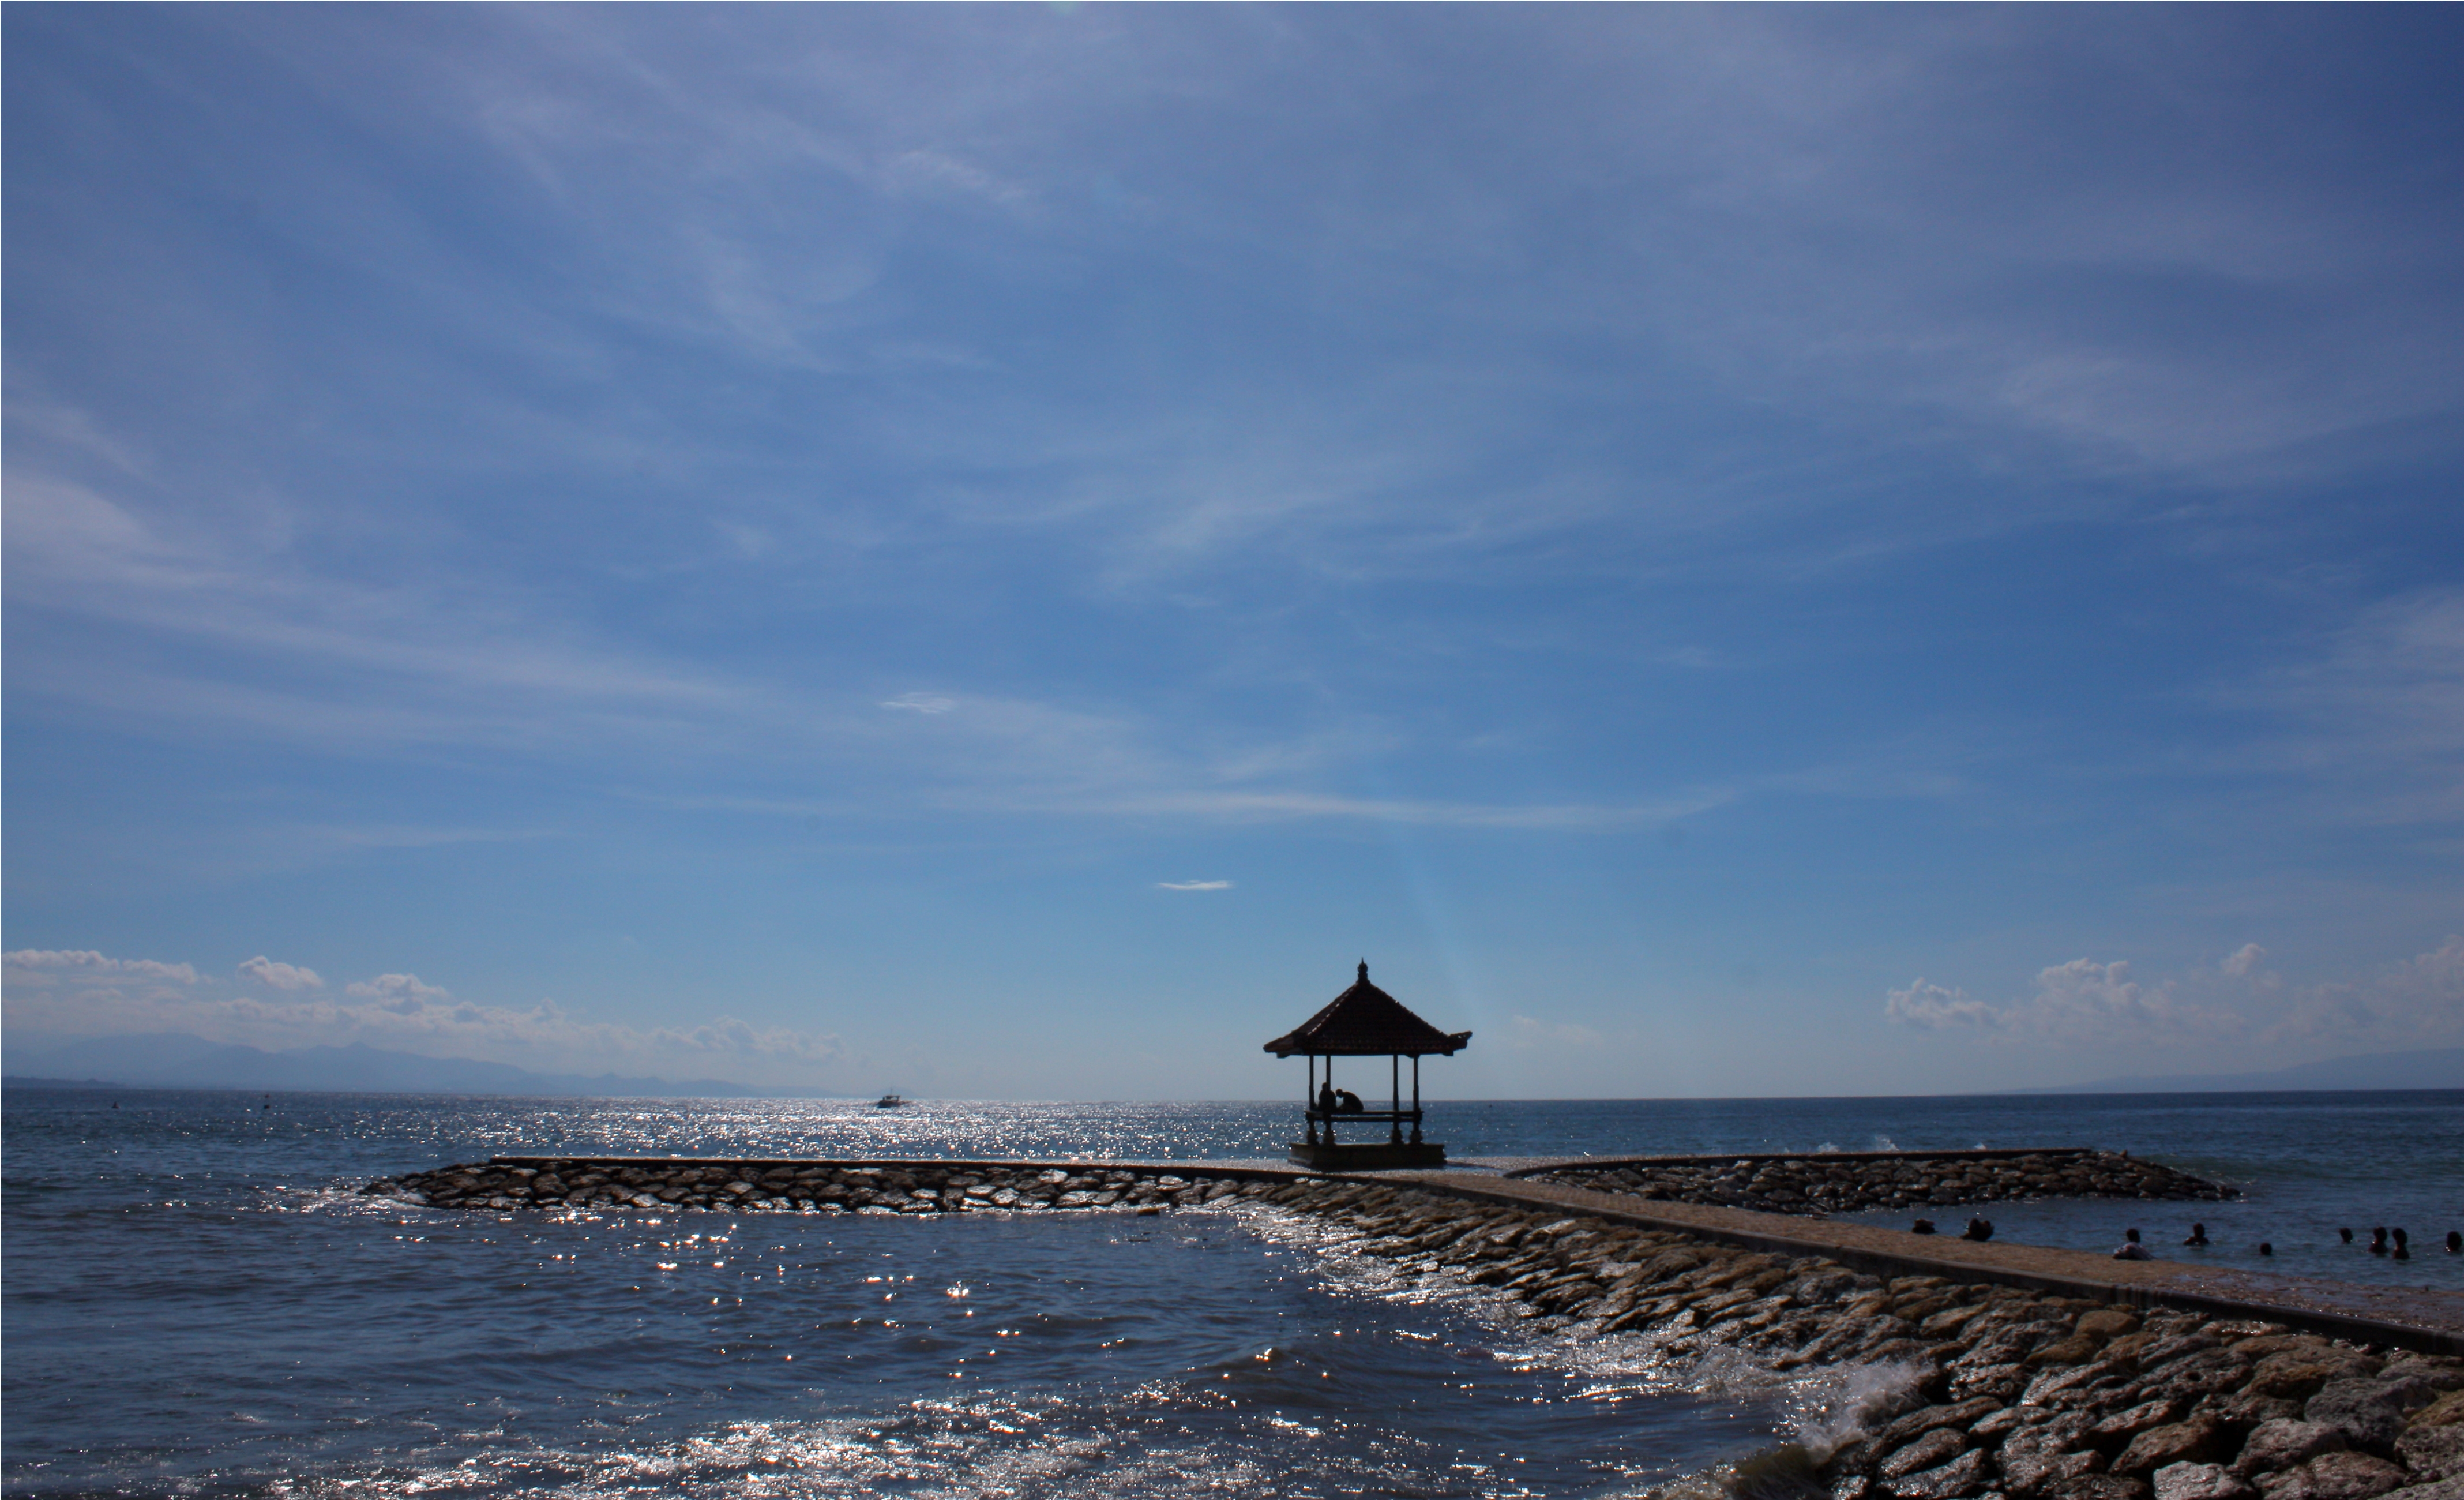 Download this Bali Pantai Sanur picture